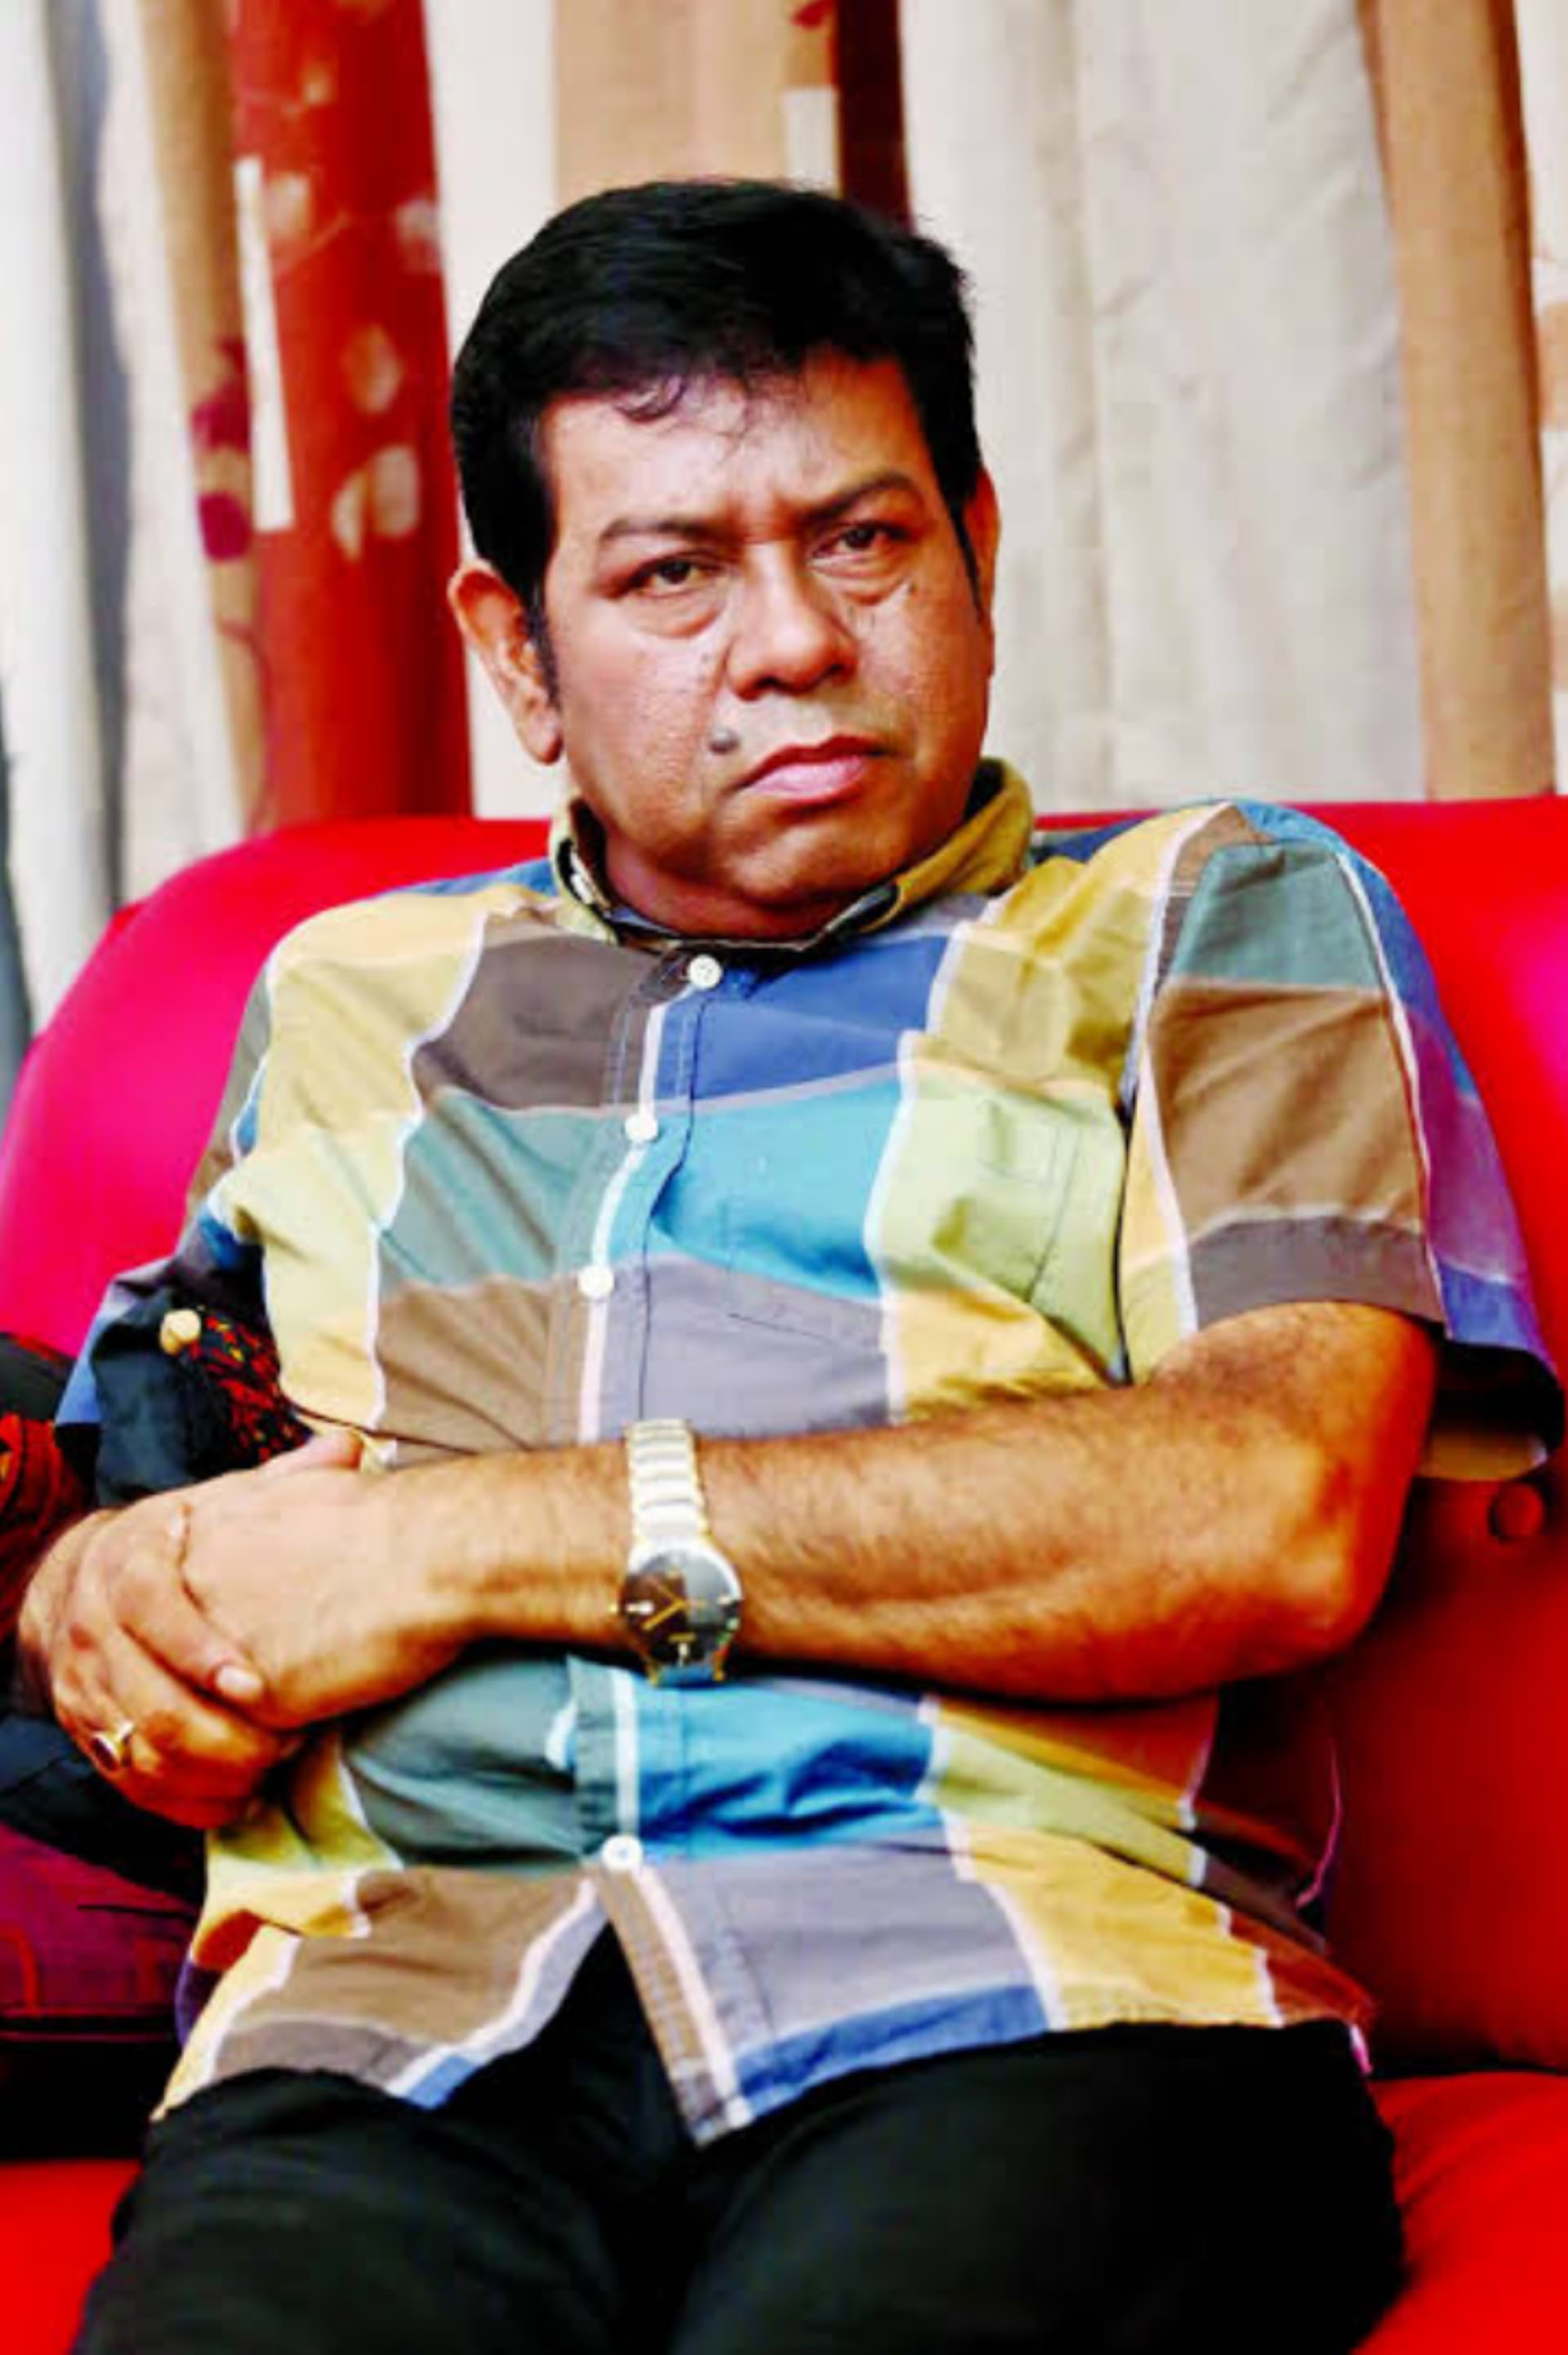 Nader Chowdhury